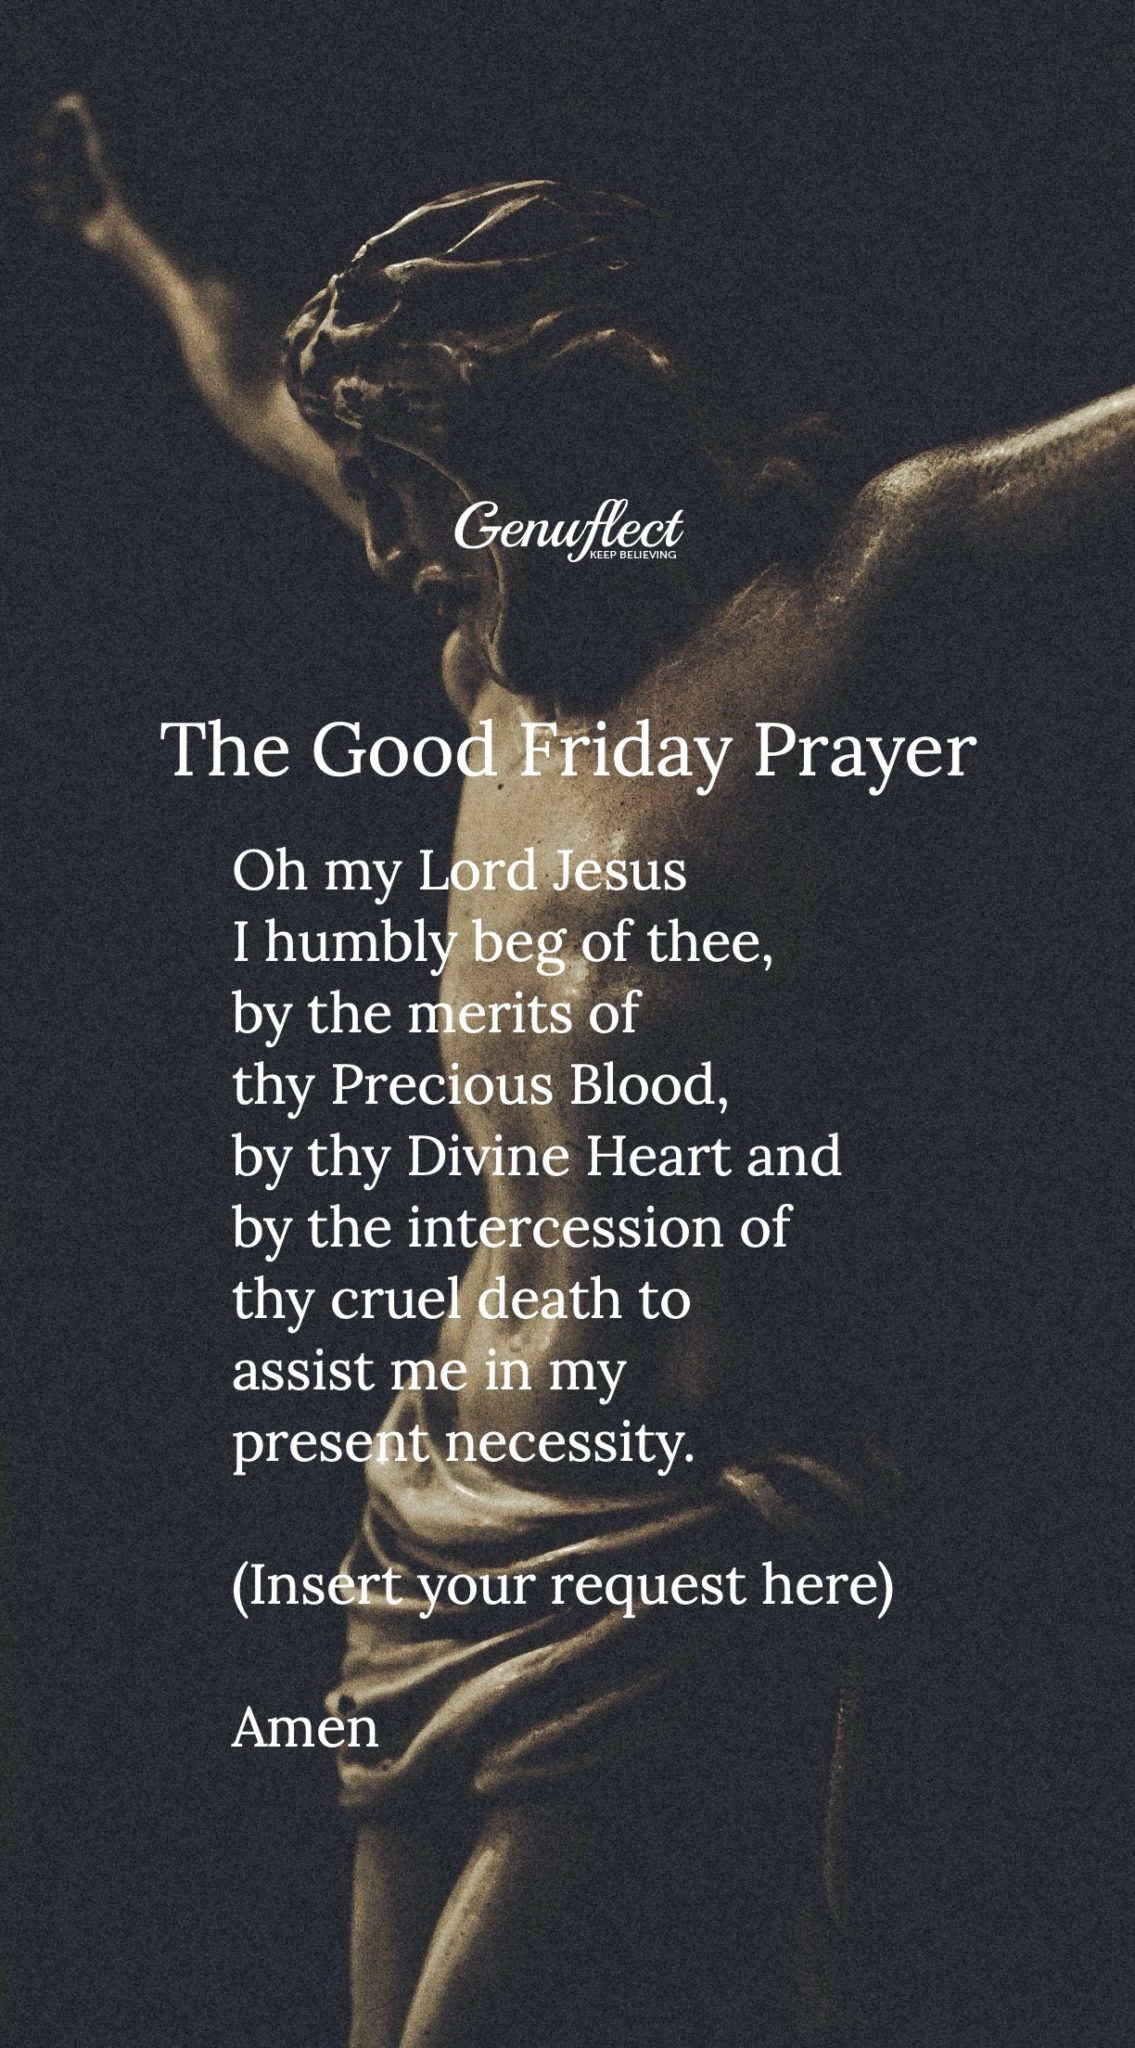 The Good Friday Prayer + Genuflect